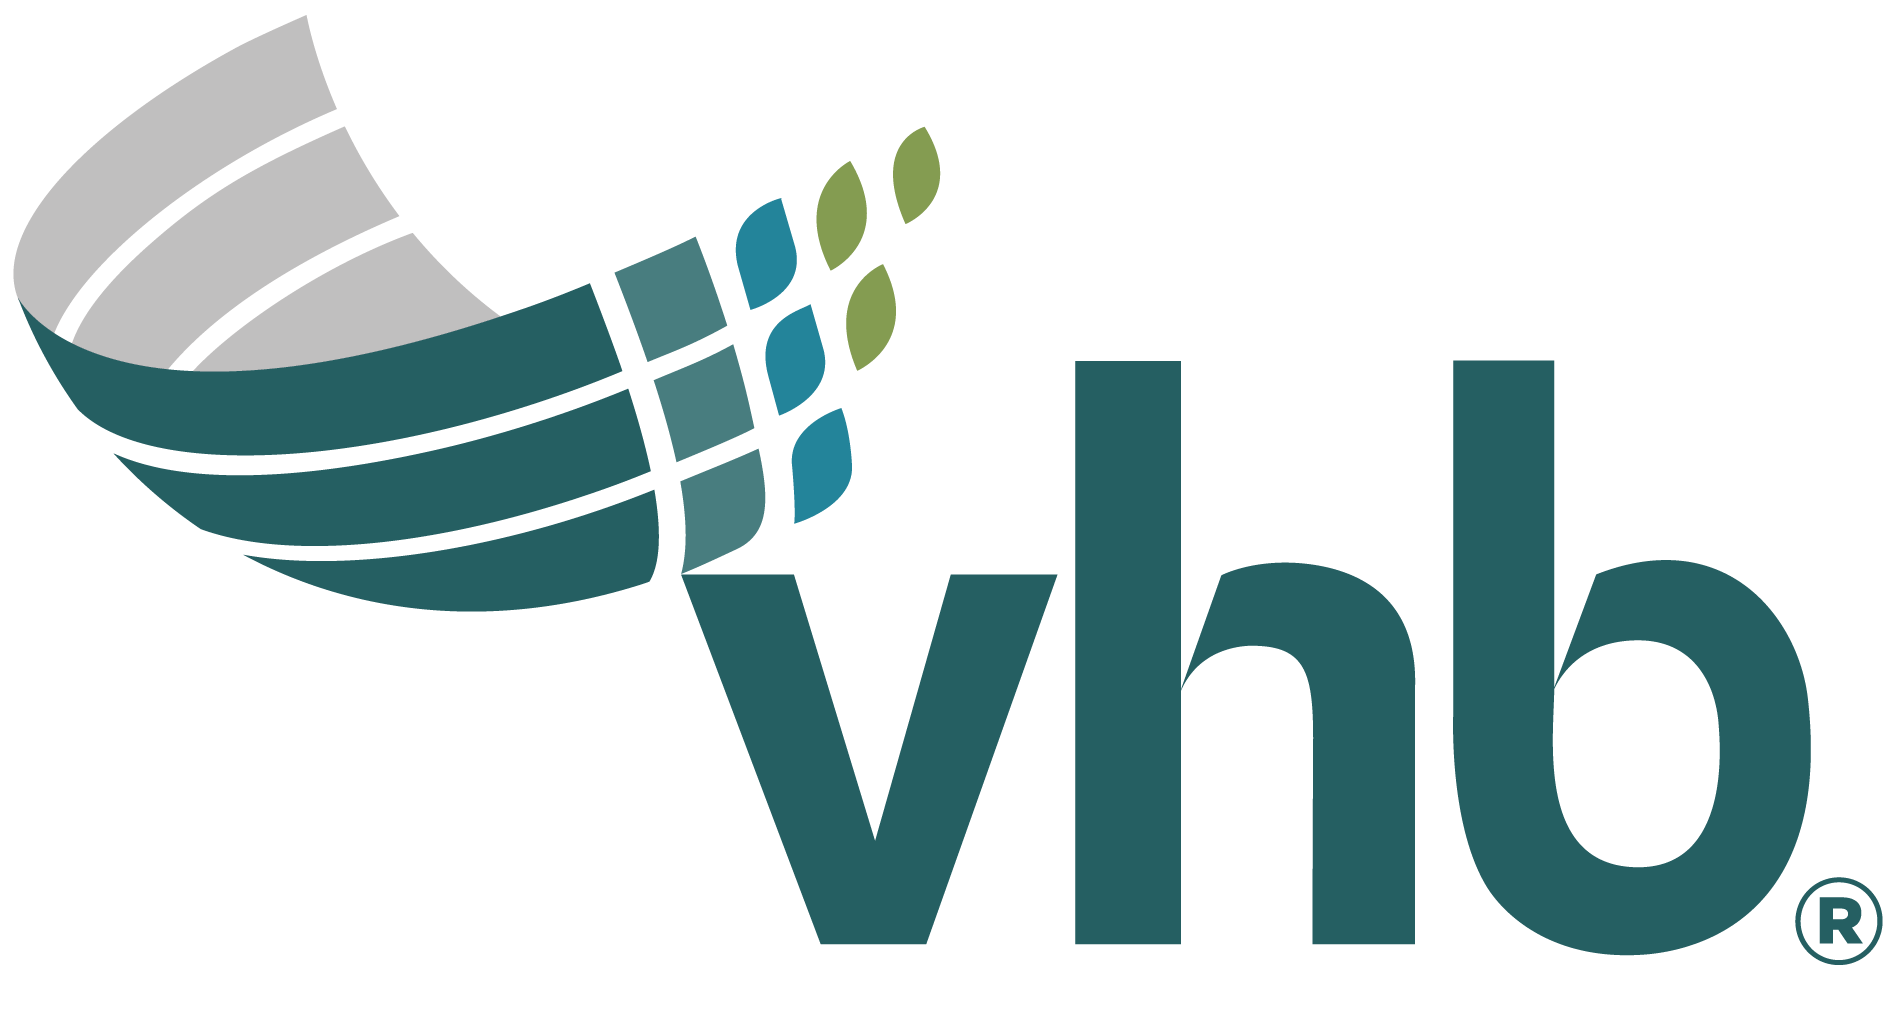 VHB Engineering, Surveying, Landscape Architecture and Geology, P.C. Company Logo